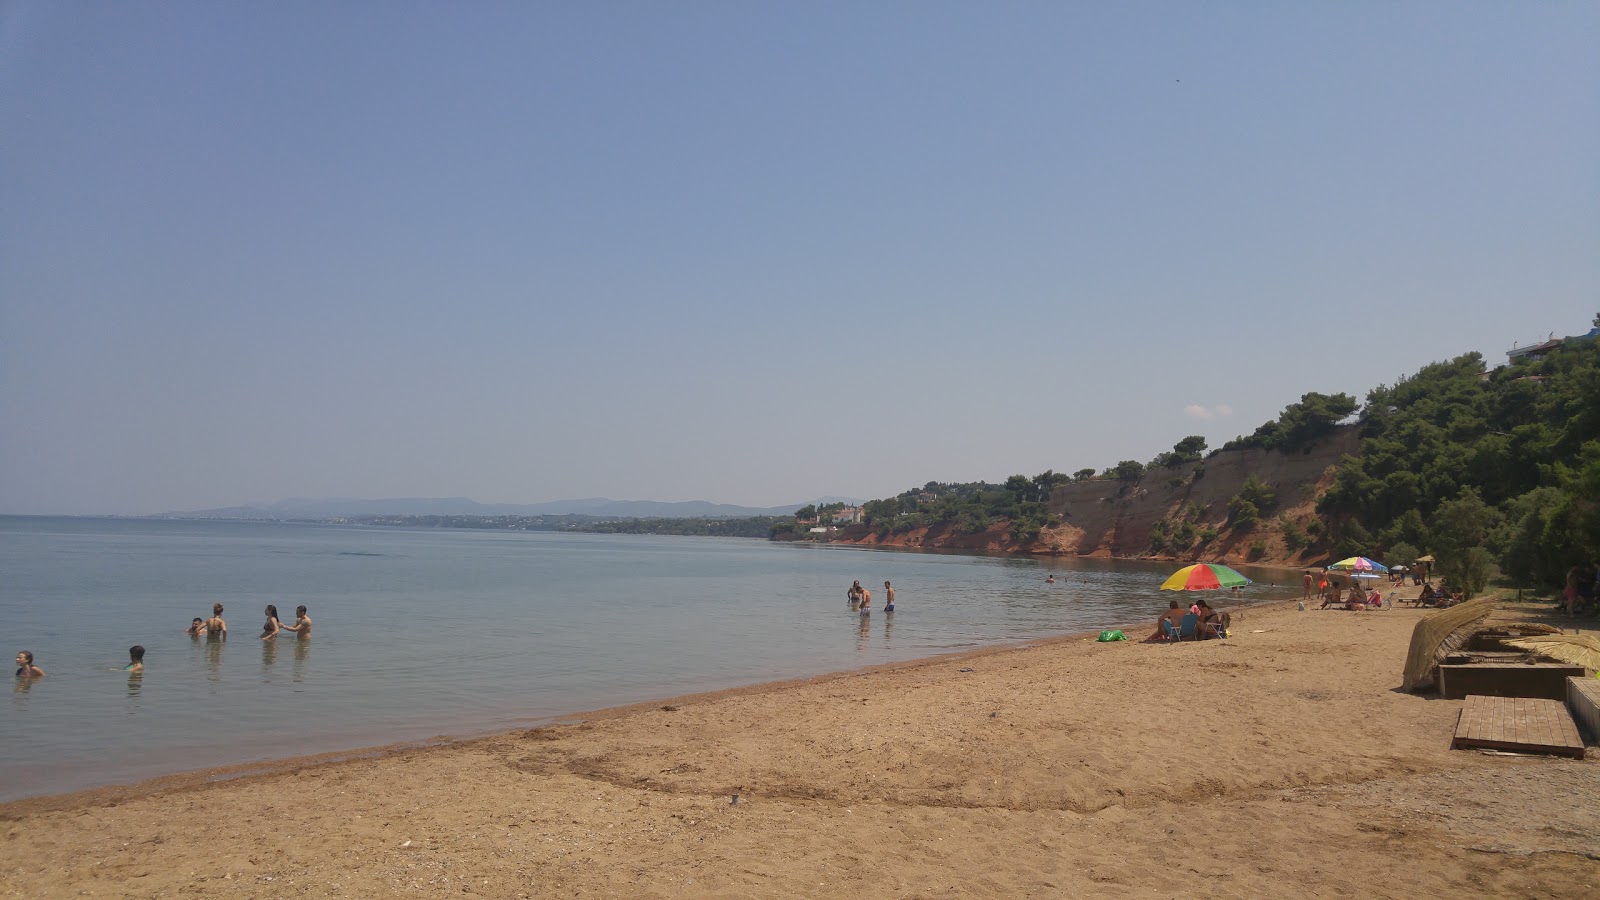 Fotografie cu Avlidas beach cu nivelul de curățenie in medie